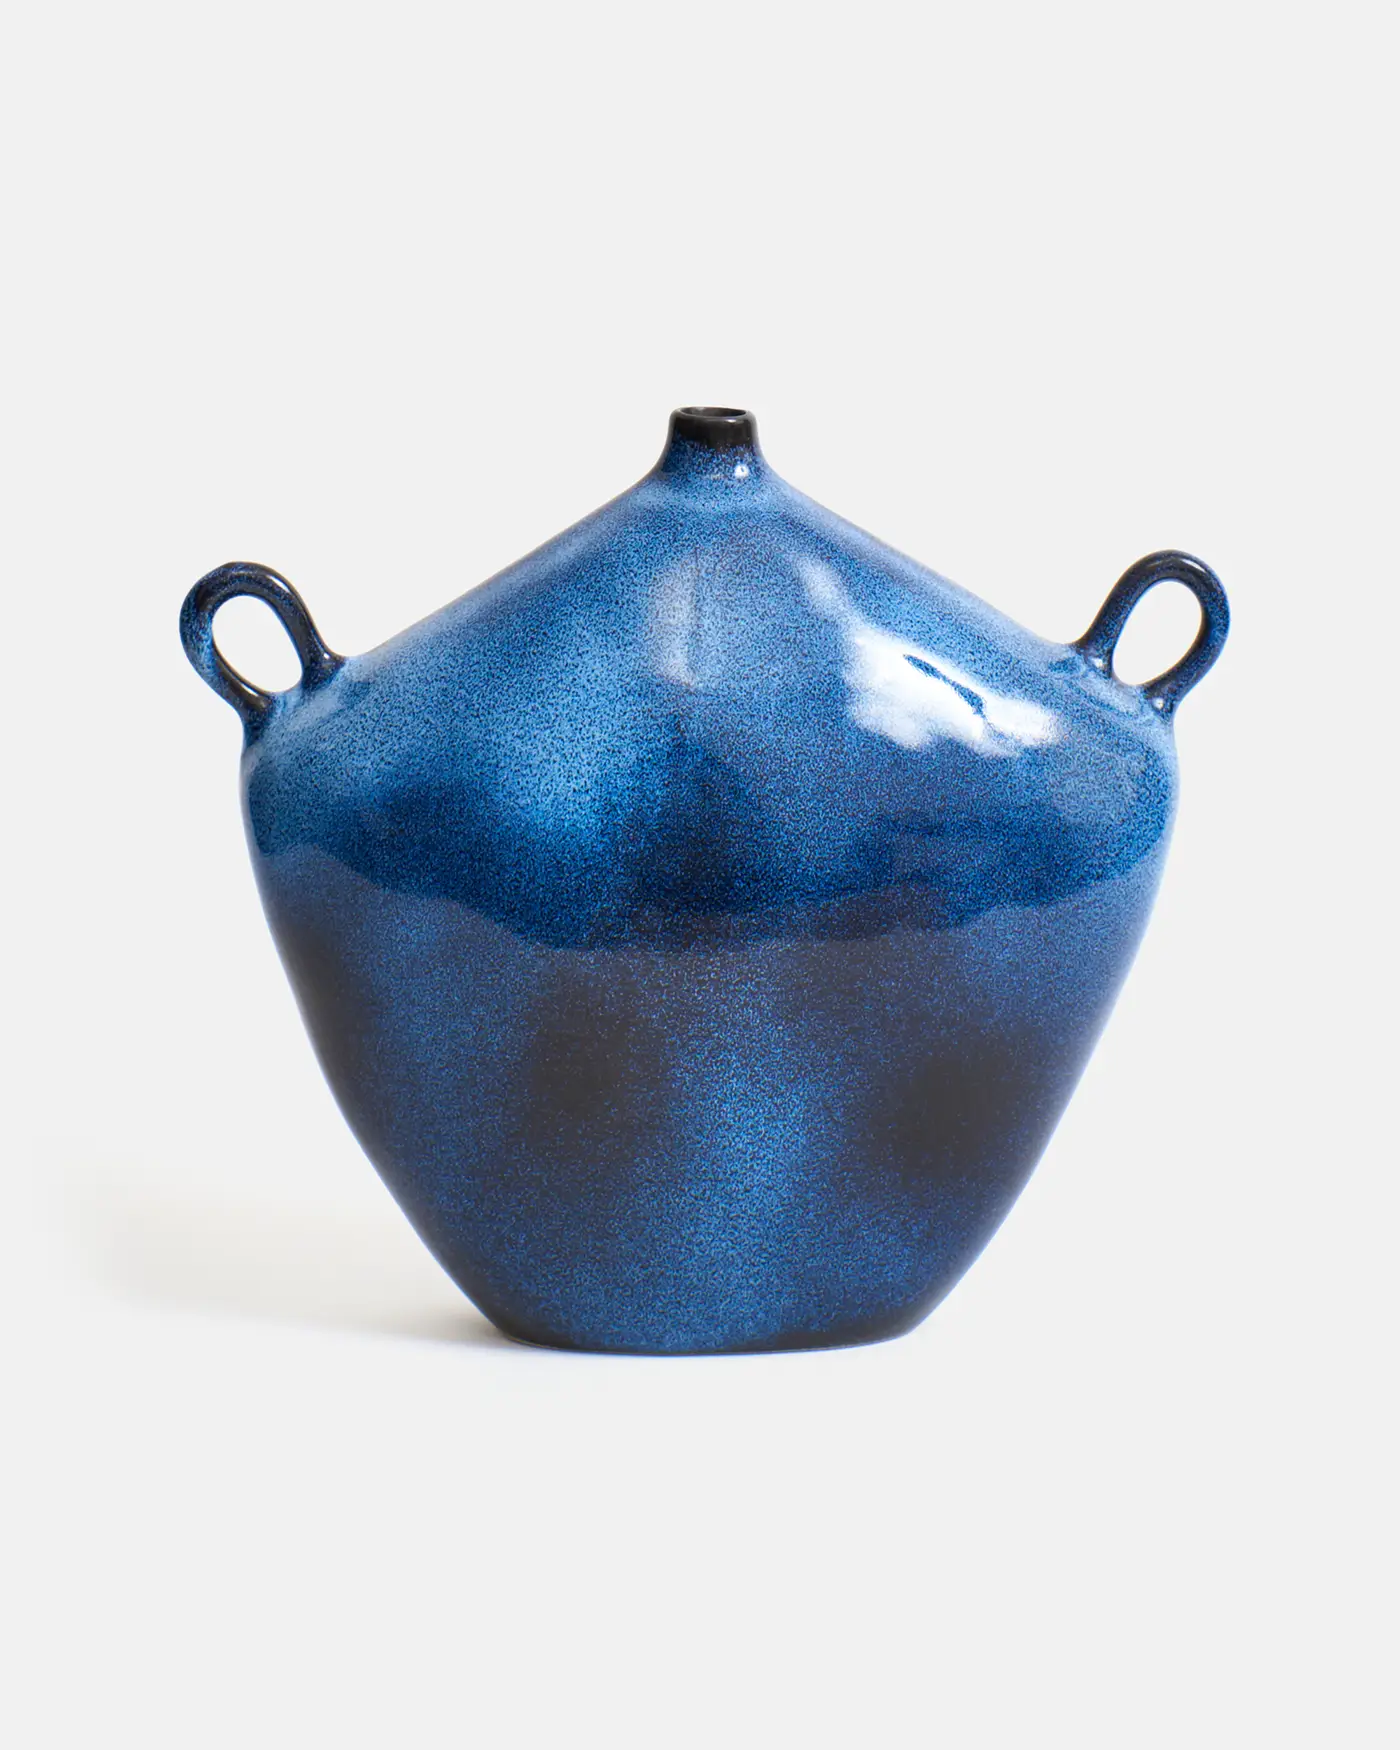 Projet 213A - Marie Vessel Vase